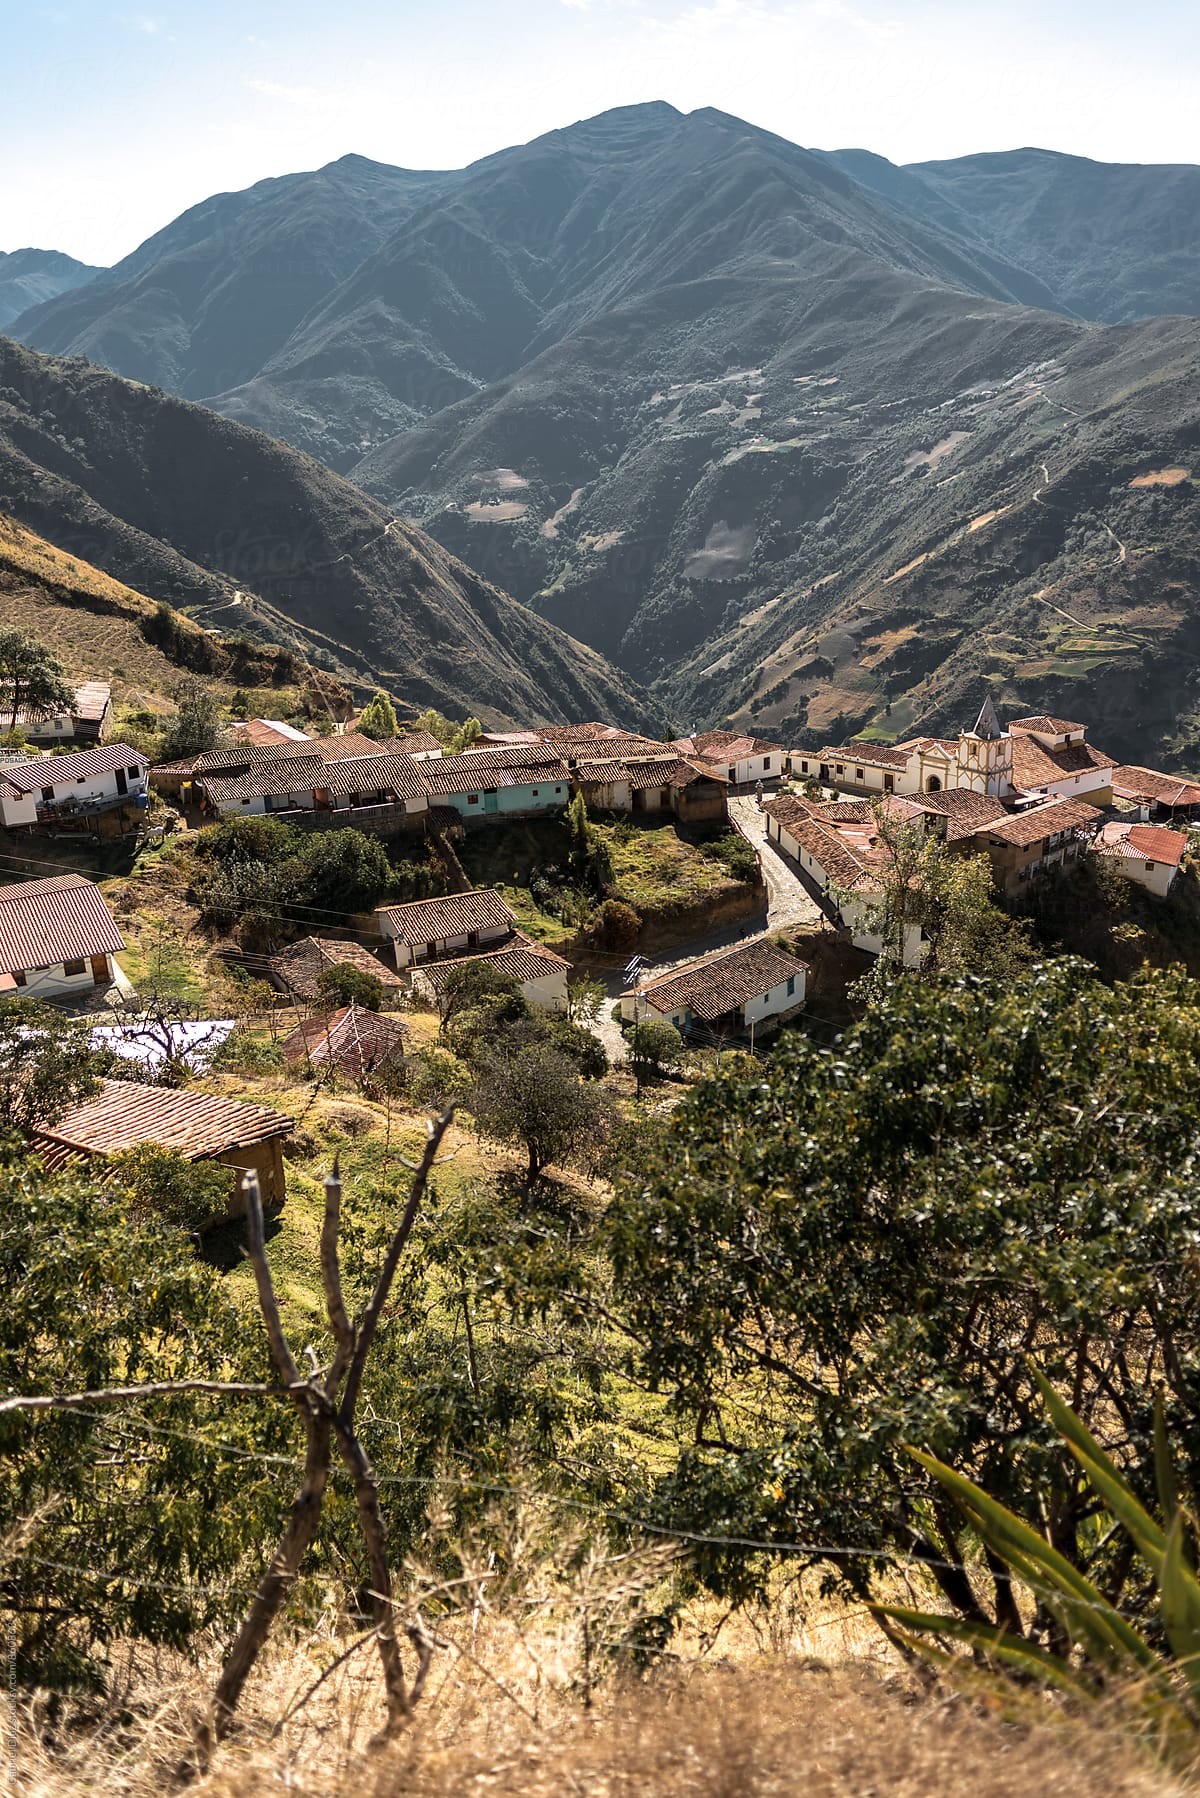 Touristic Colonial Town Los Nevados in south American Andes. Venezuela